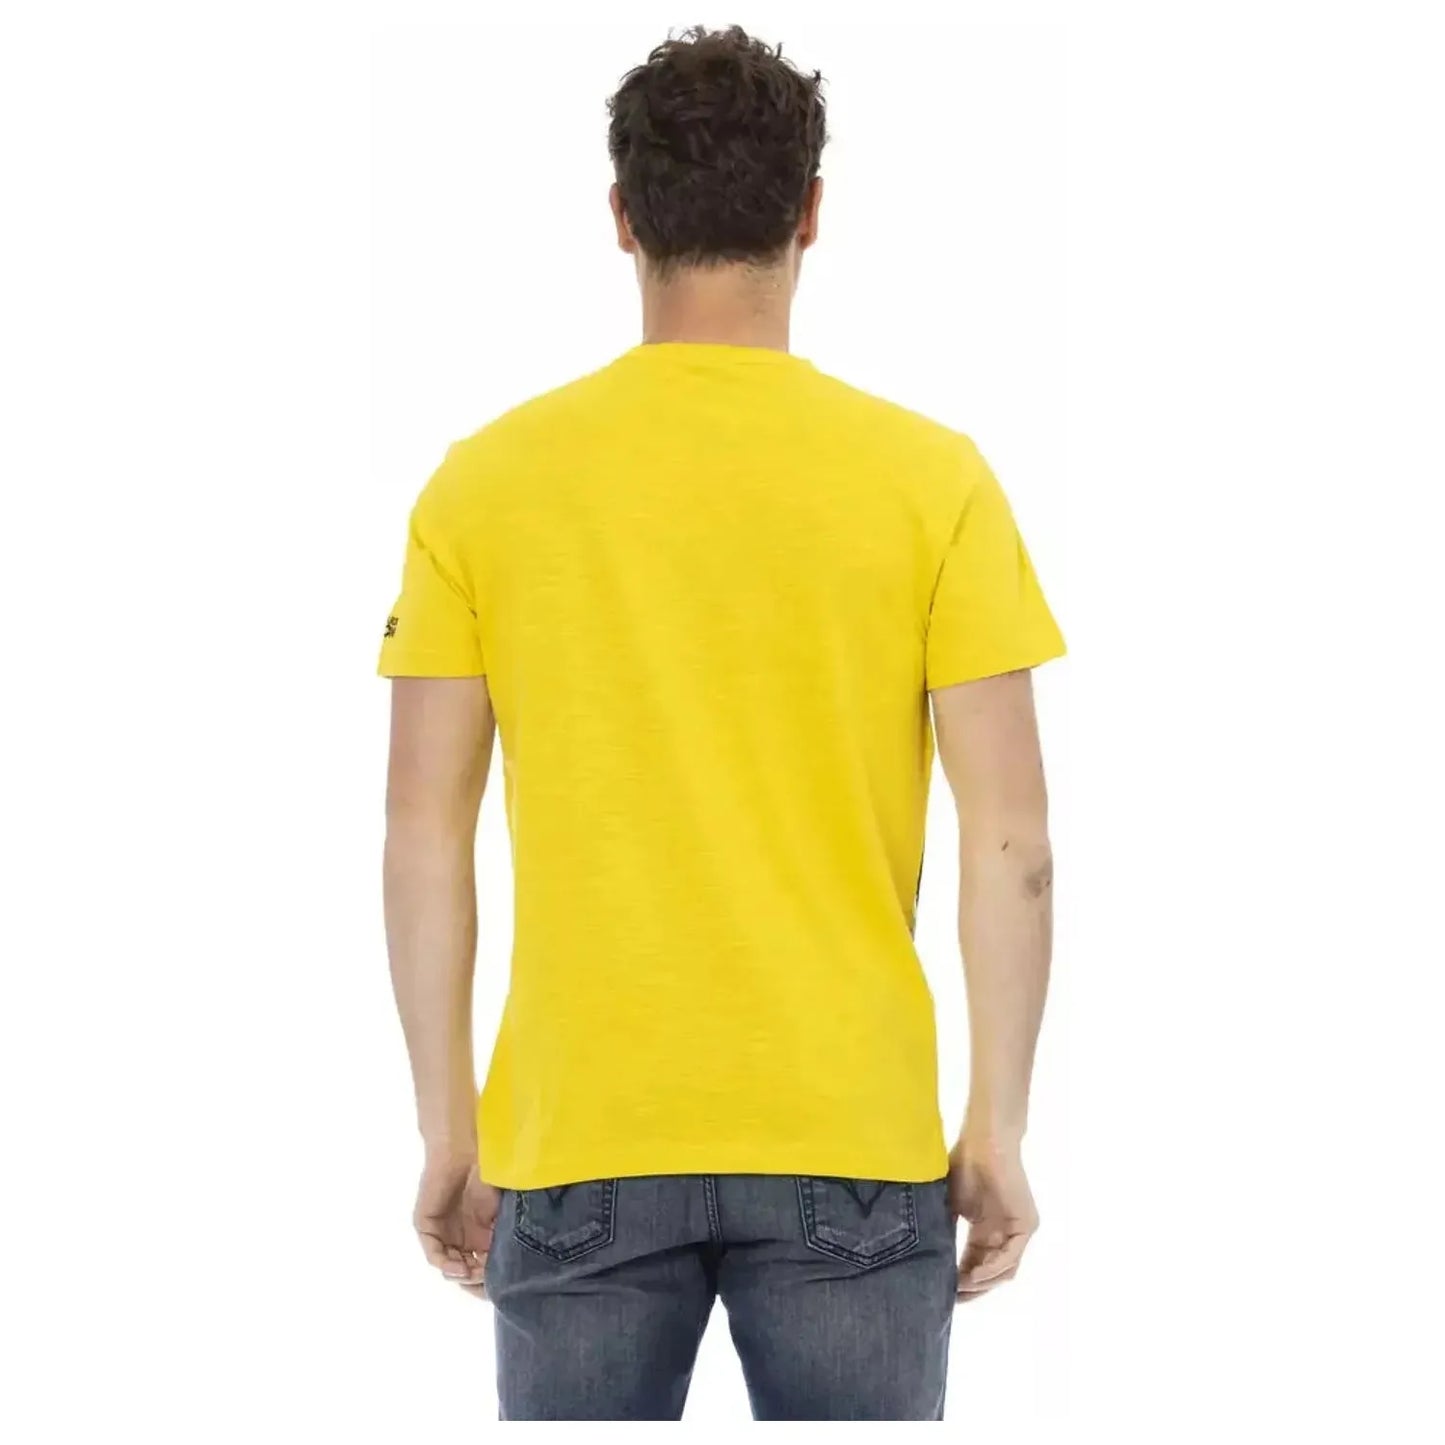 Trussardi Action Sleek Short Sleeve Cotton Blend Tee yellow-cotton-t-shirt-12 product-22733-891924758-22-20d60482-db3.webp